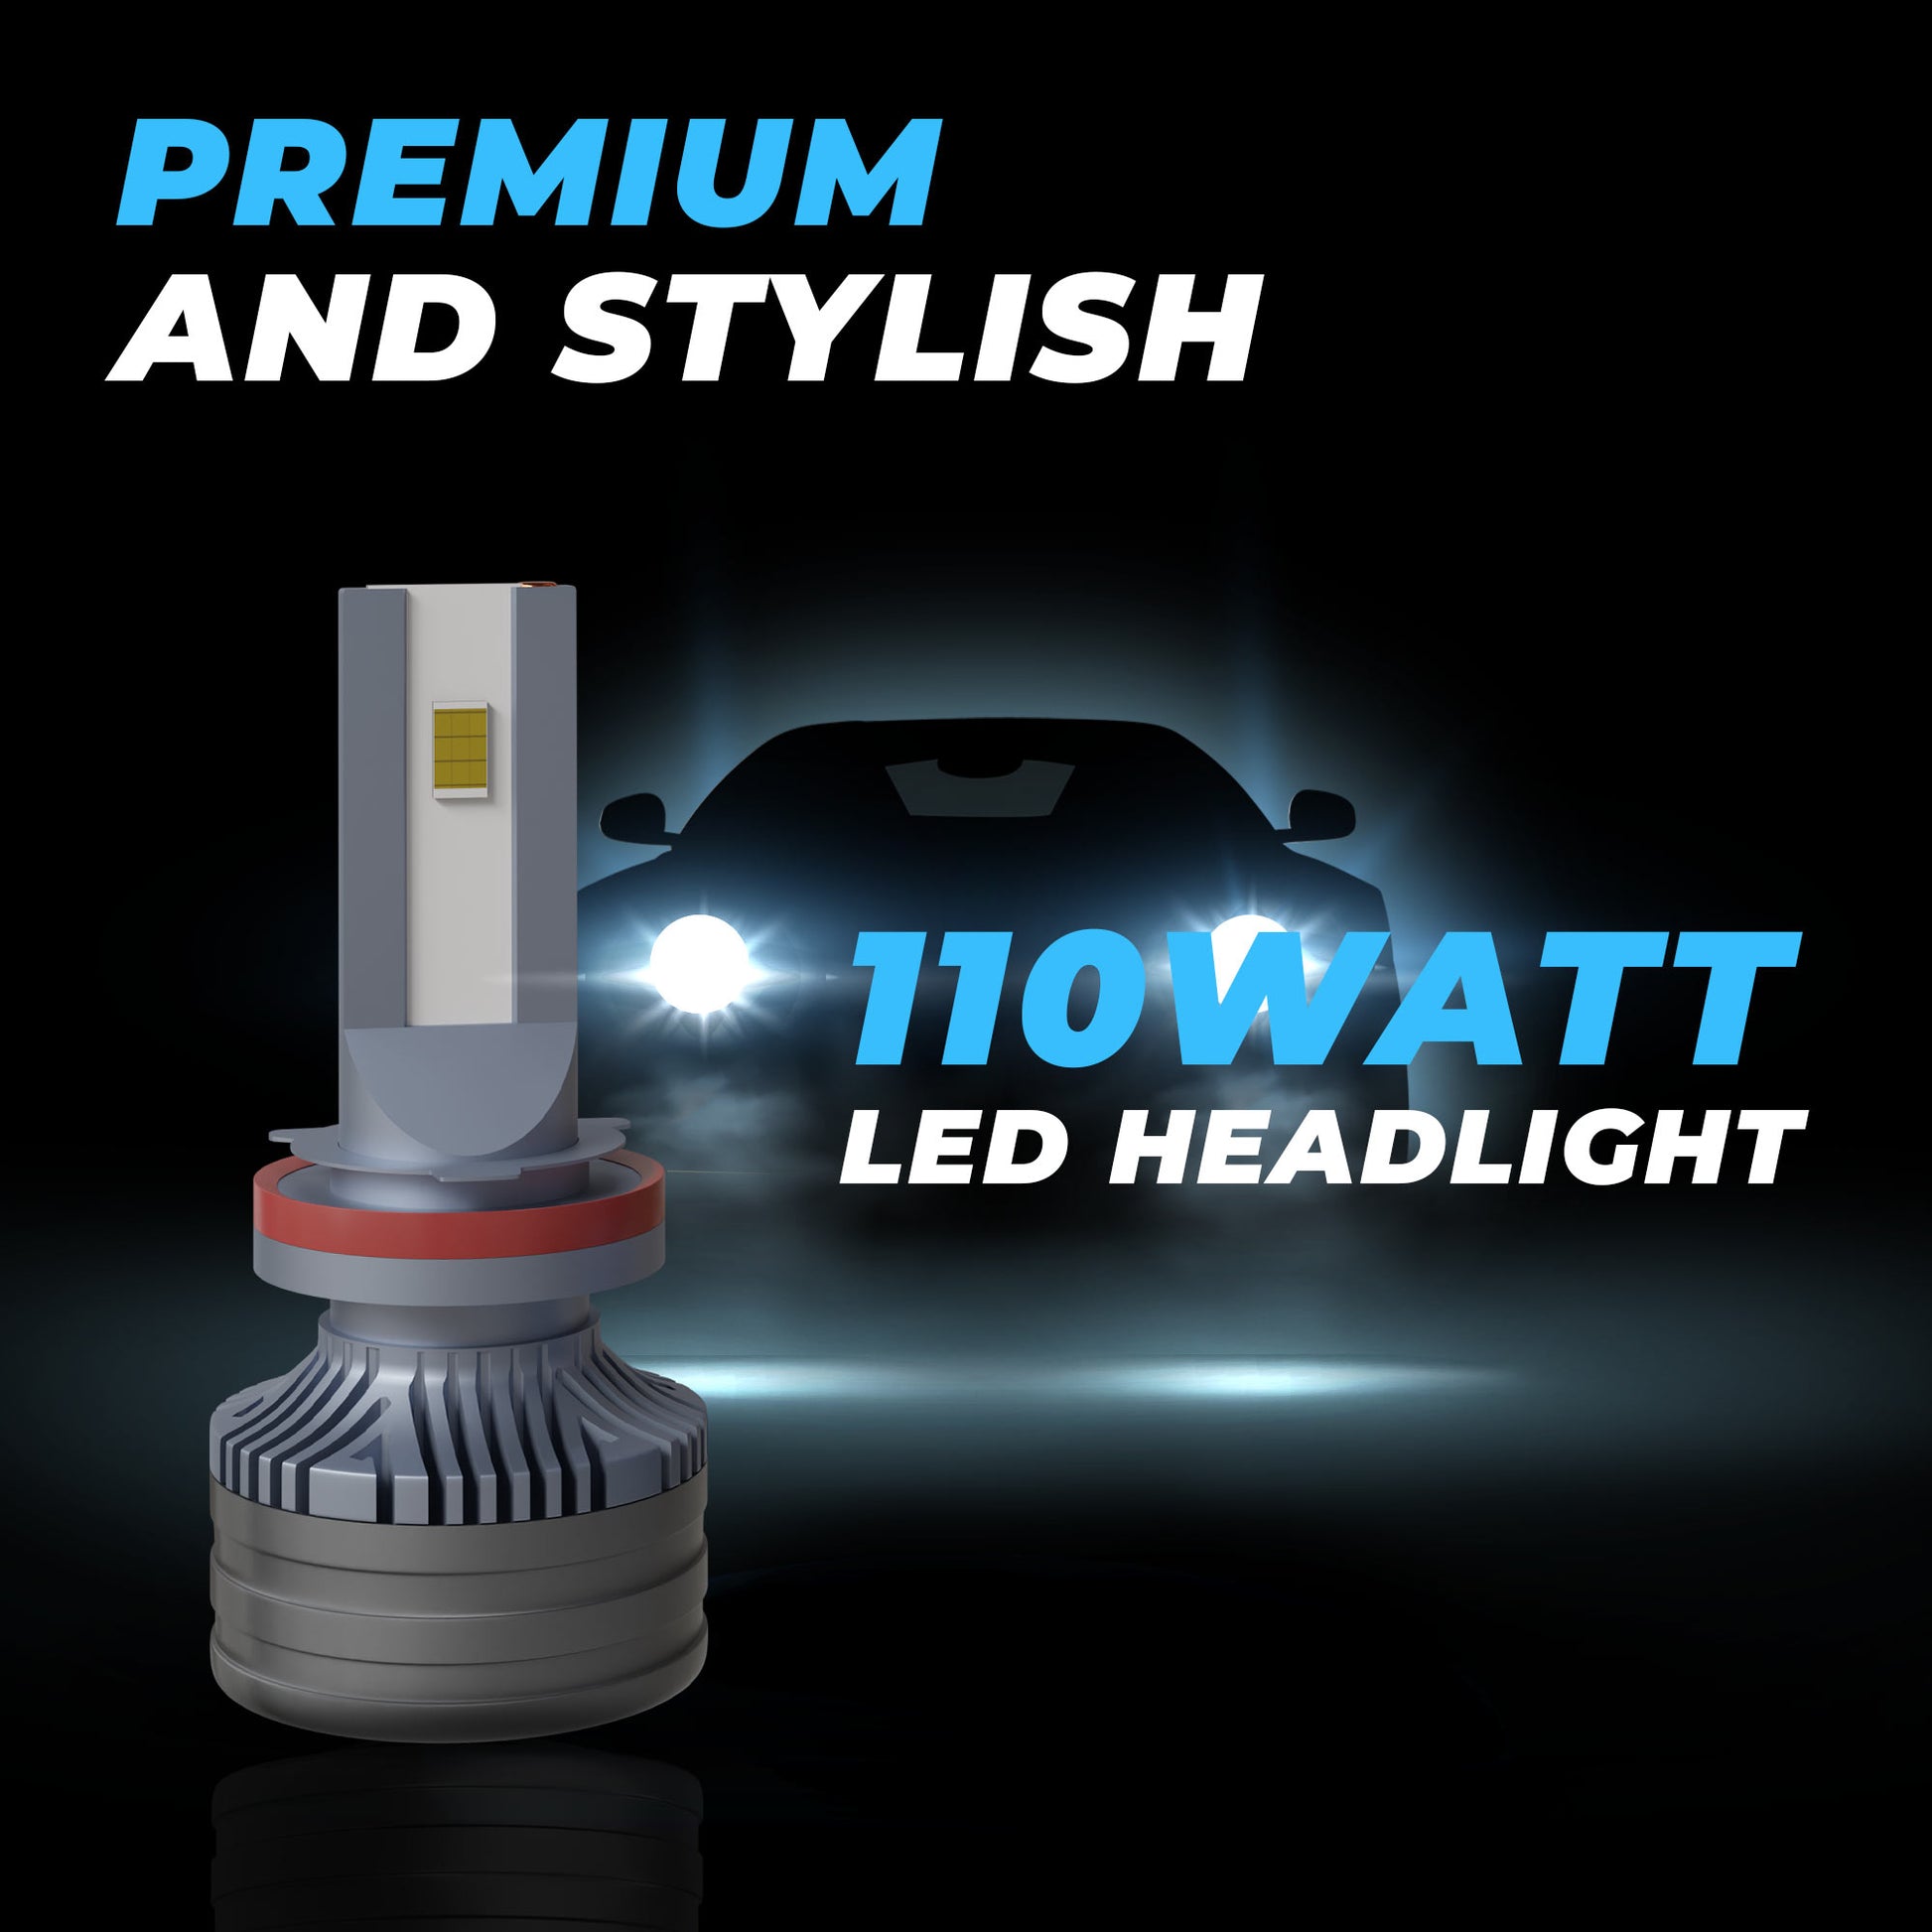 JCBL ACCESSORIES Lumenz 9005 110W Car Headlight LED Bulb, 8000 Lumens Dual-Beam, 6000-6500K Day Light, Weather-Resistant IP67 Waterproof| AND STYLISH 110W LED HEADLIGHT